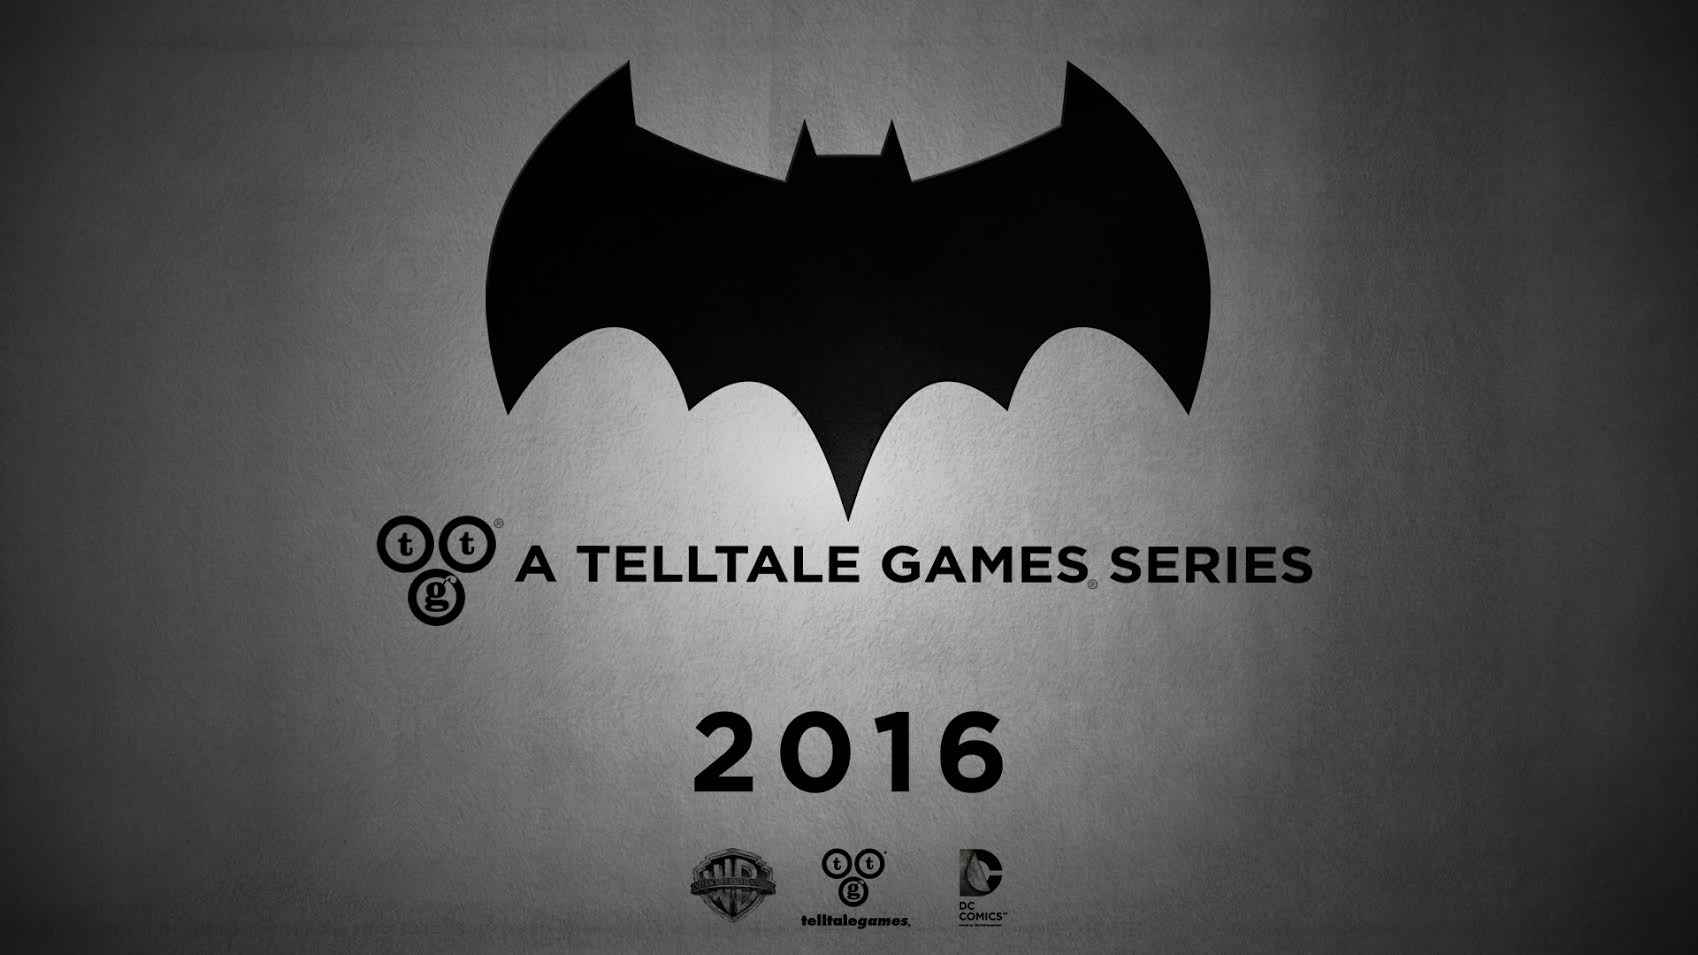 http://cdn.telltalegames.com/files/blogs/2015-12-03/BATMAN_LOGO.jpg